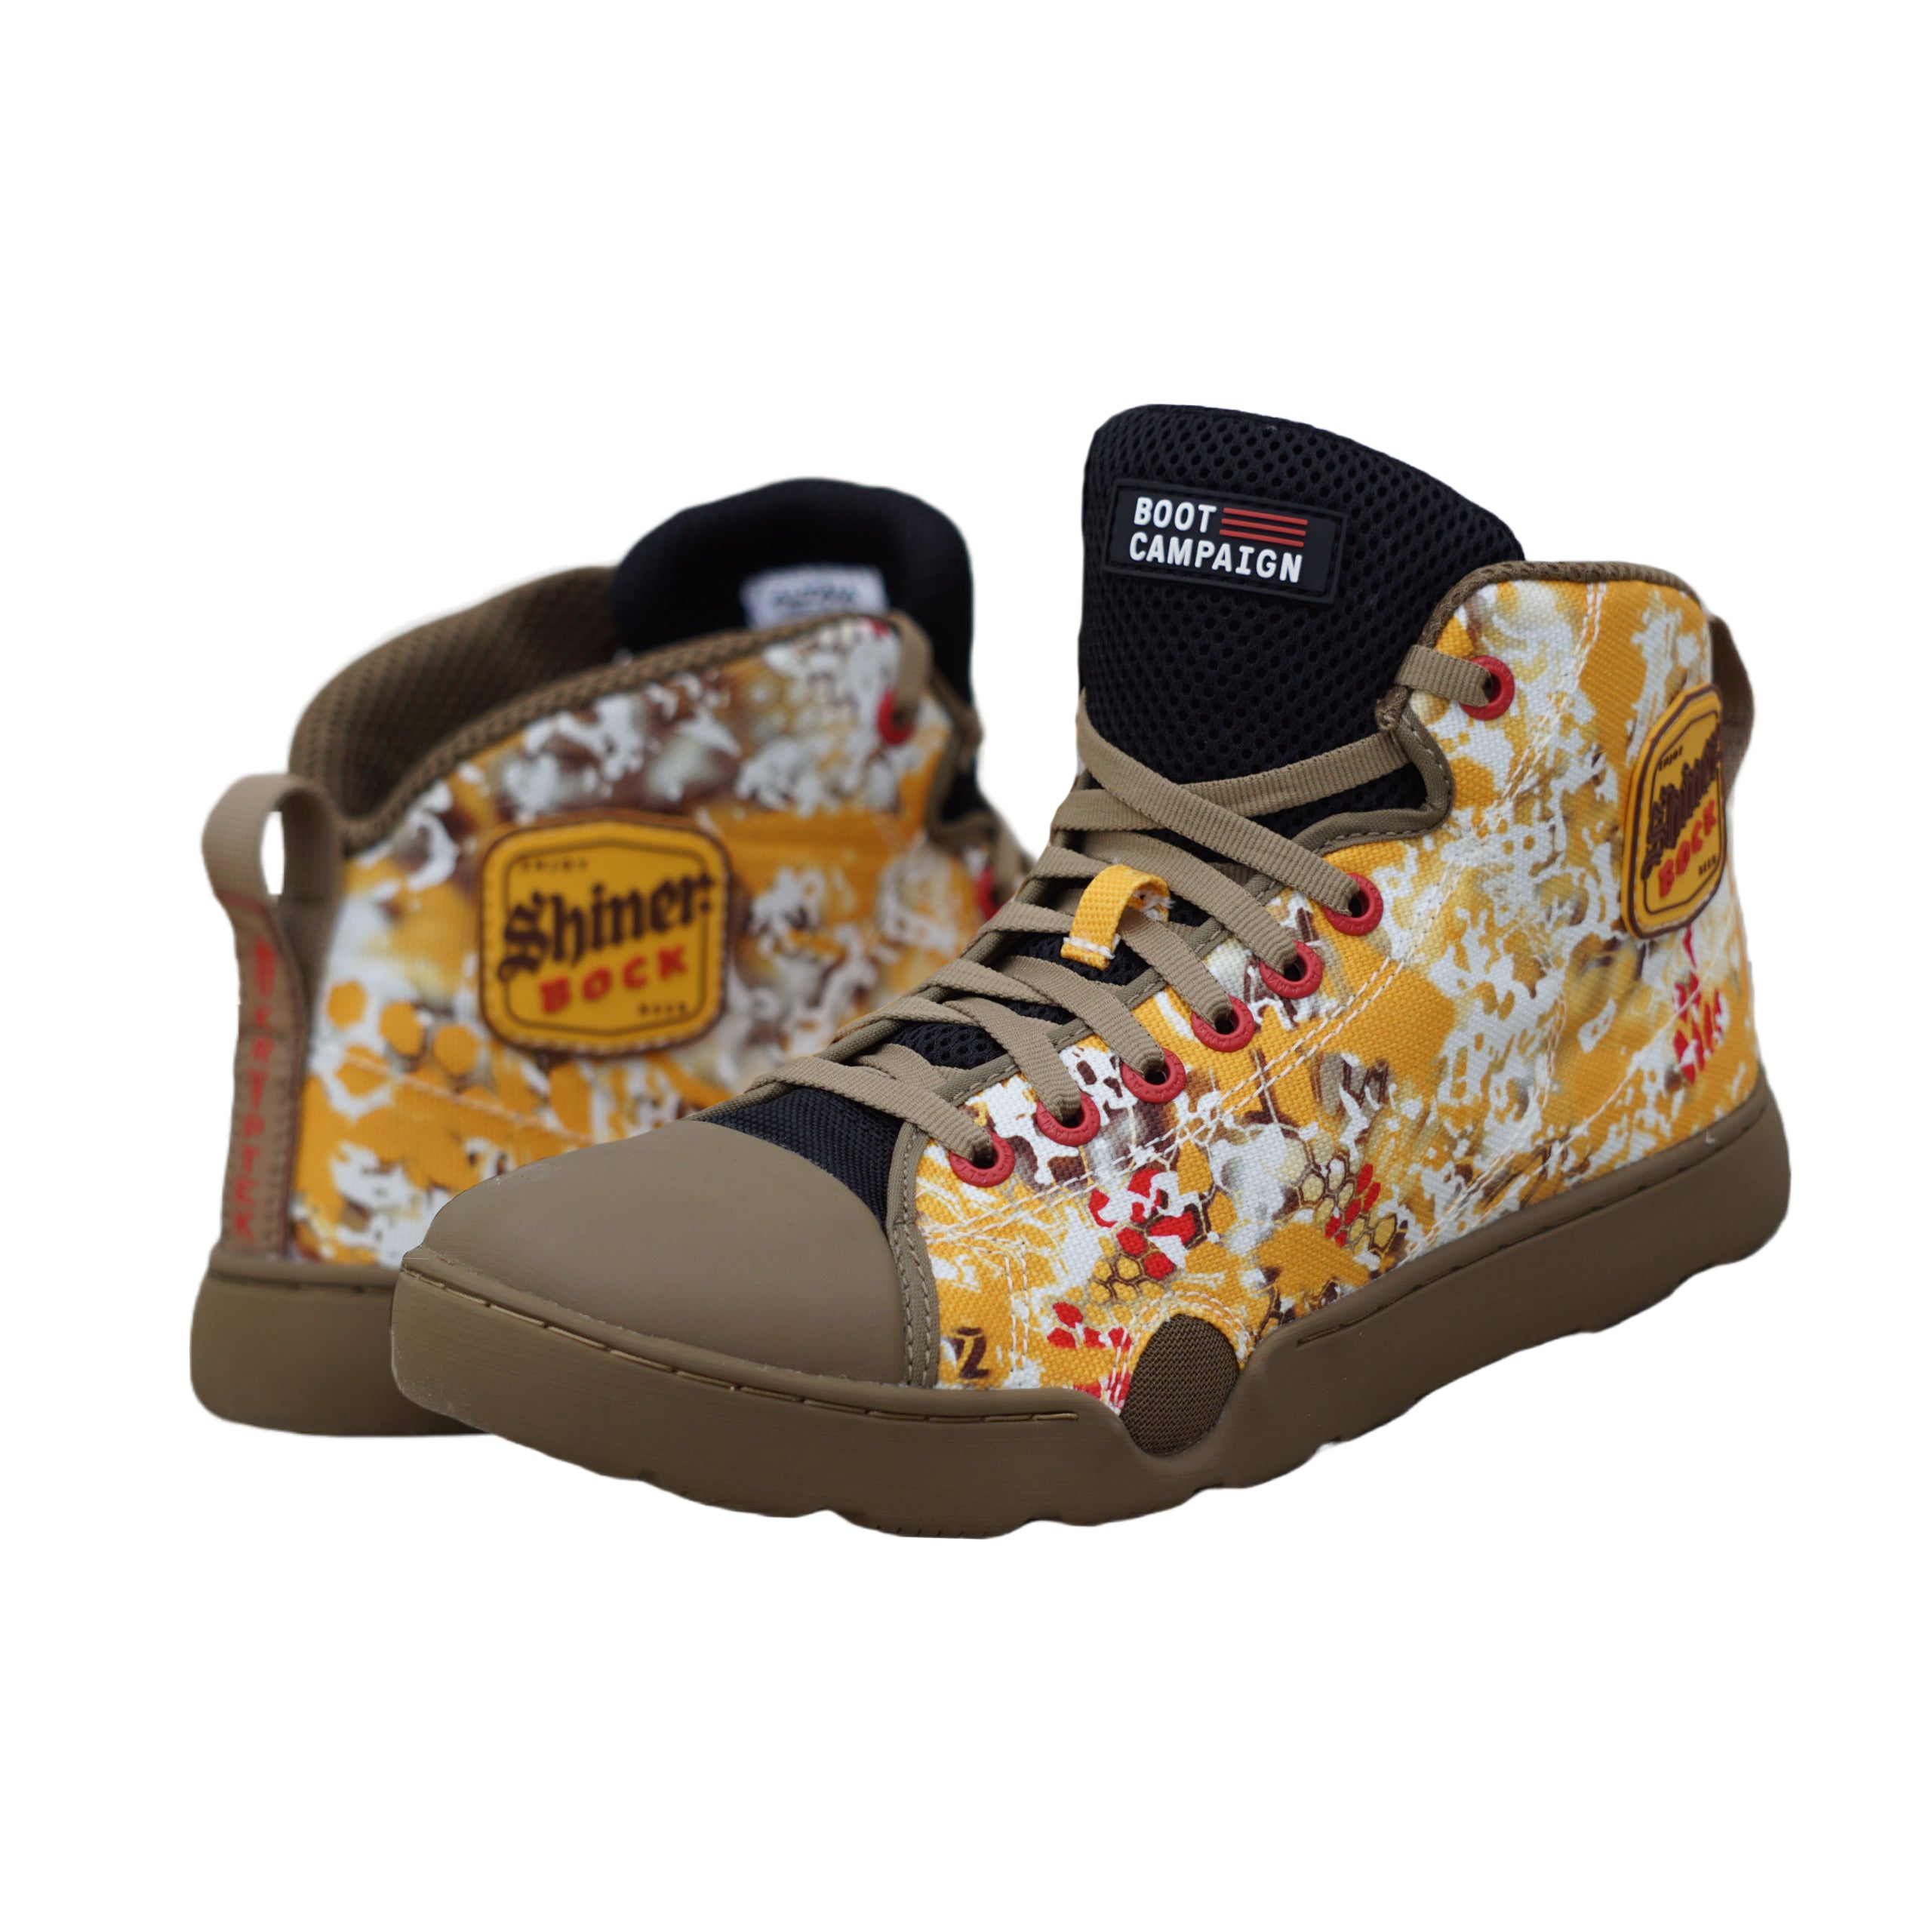 Shiner Beers x Boot Campaign Custom Altama